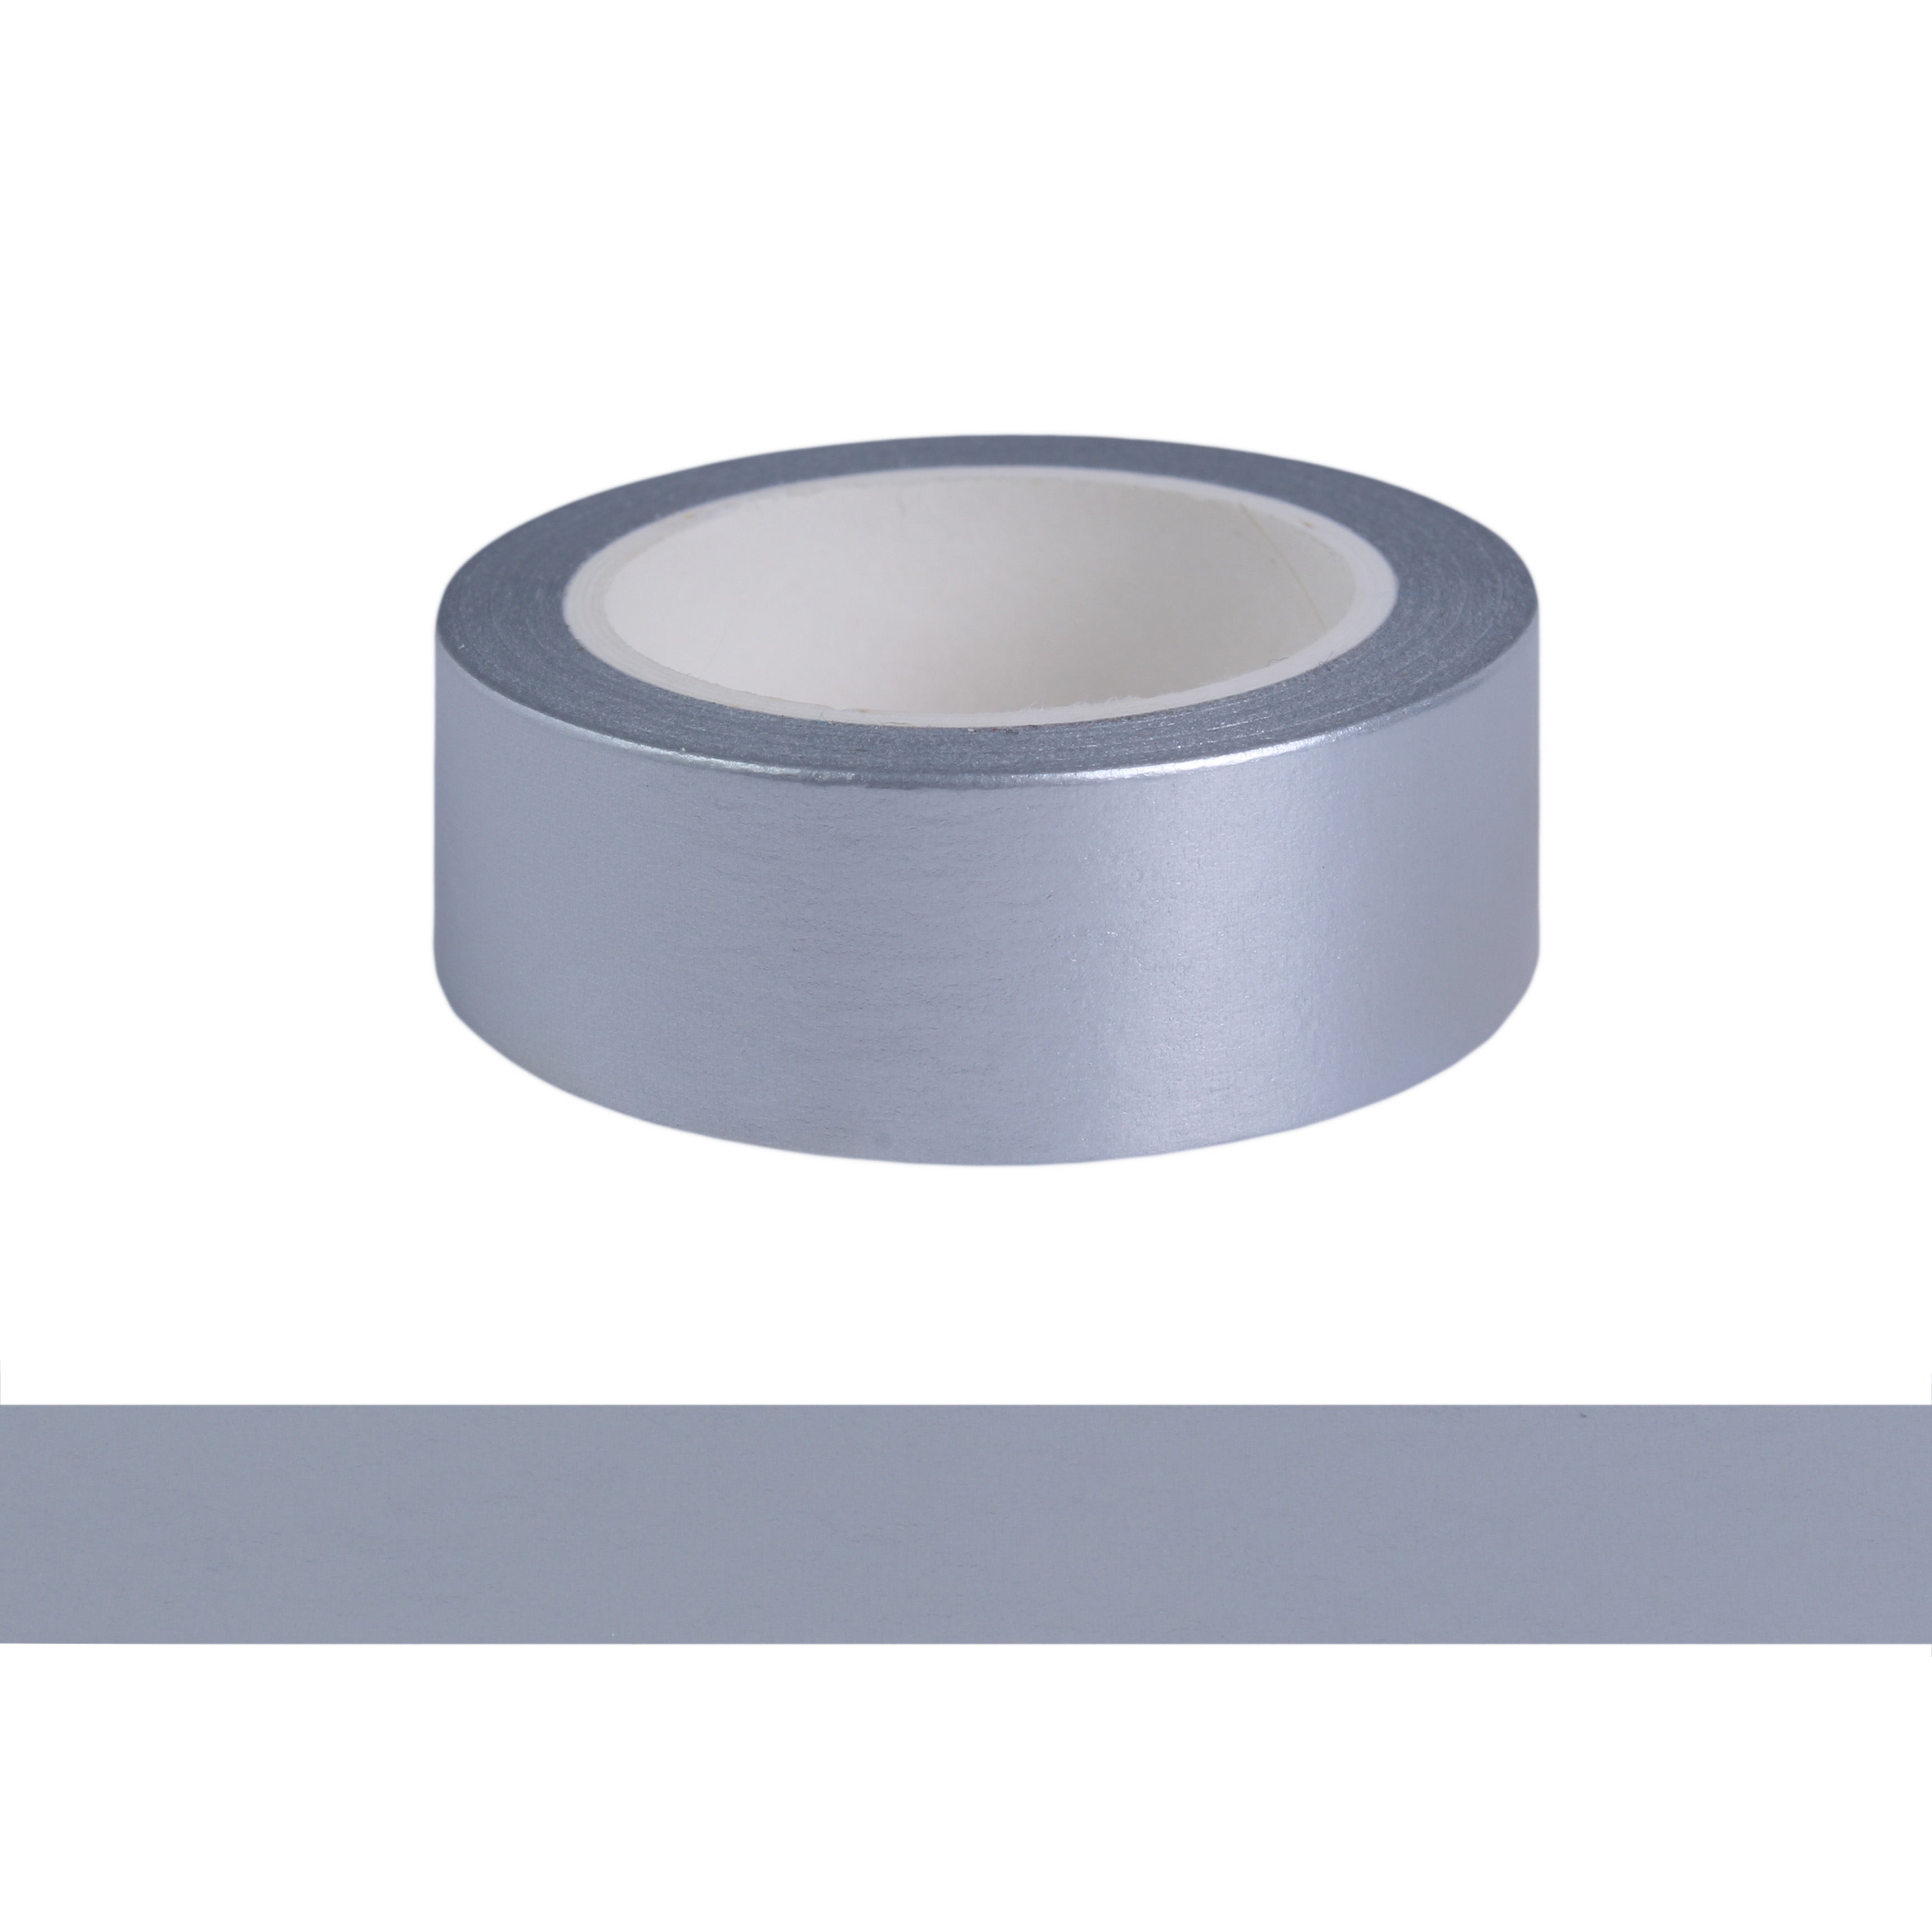 Washi Tape Matte Silver Foil - 15mmx10mtr